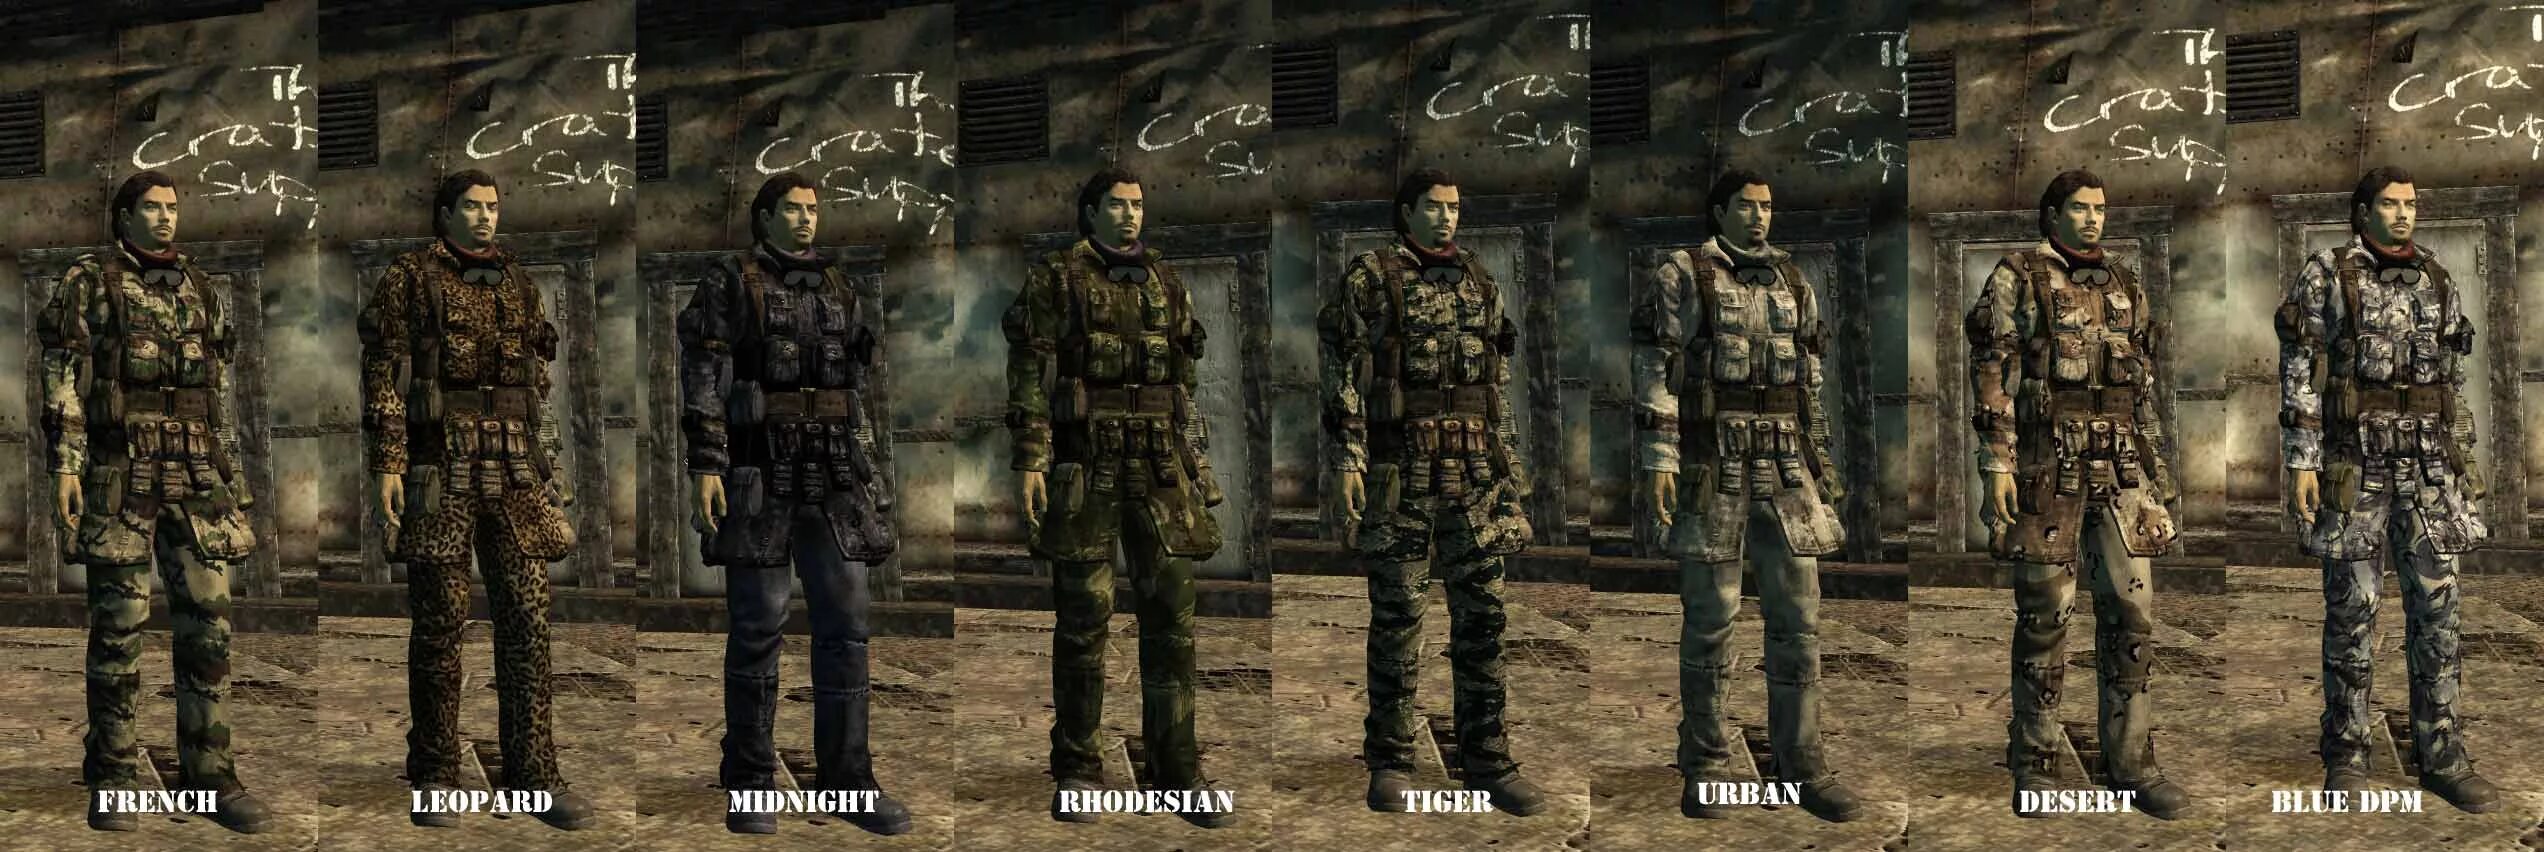 Fallout броня чит. Фоллаут 3 одежда. Fallout 3 броня и одежда. Fallout 3 вся одежда и броня. Костюм торговца Fallout 3.